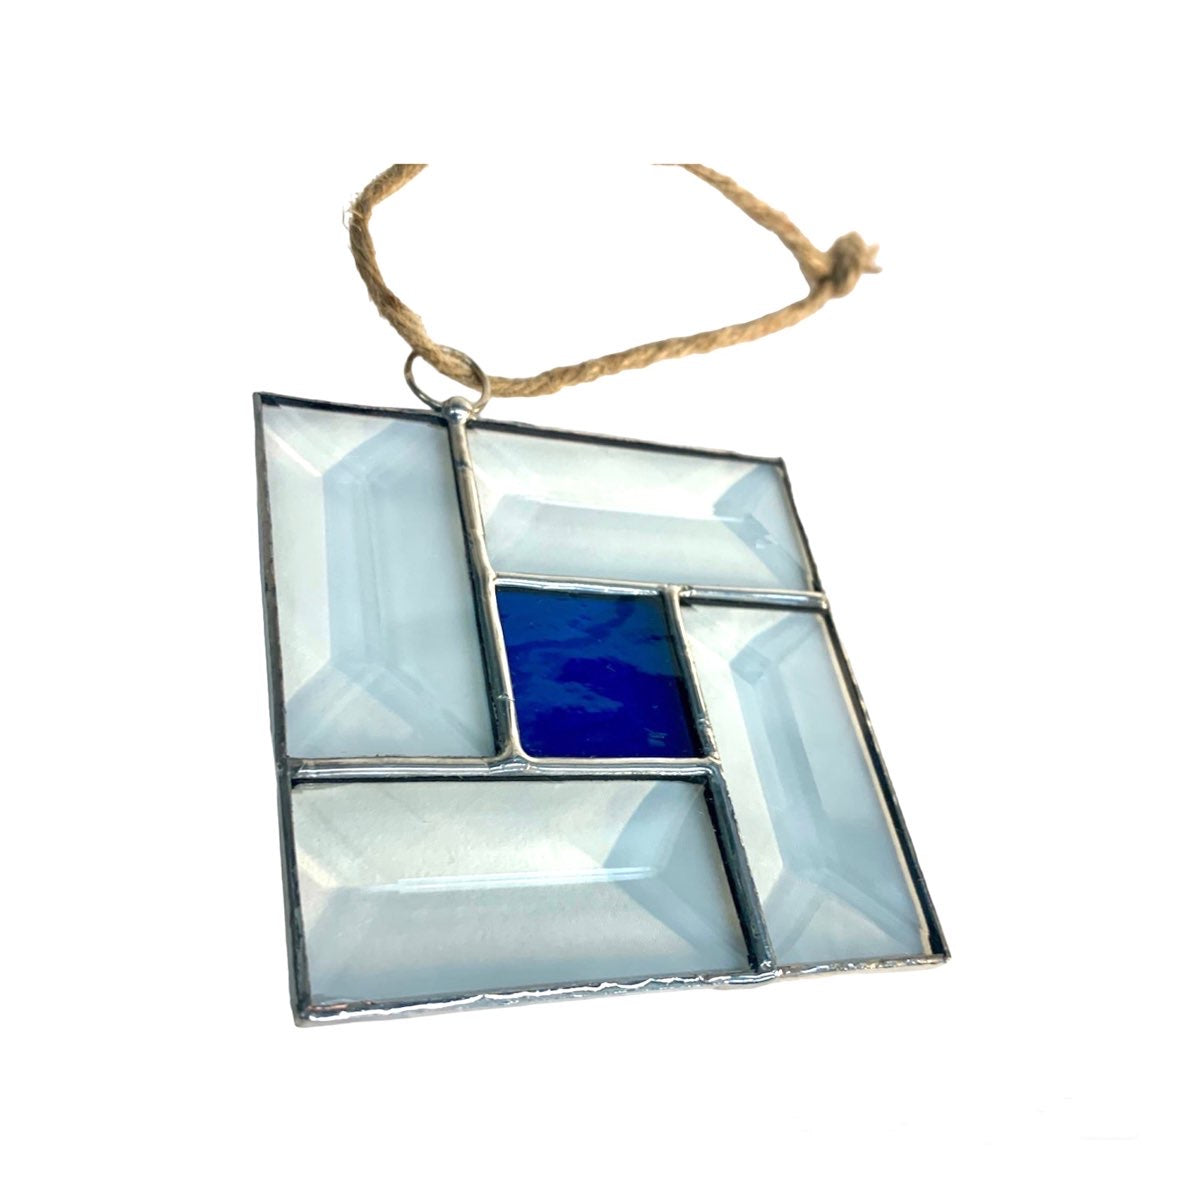 Stained Glass Bevel Box Suncatcher - 3” x 3”